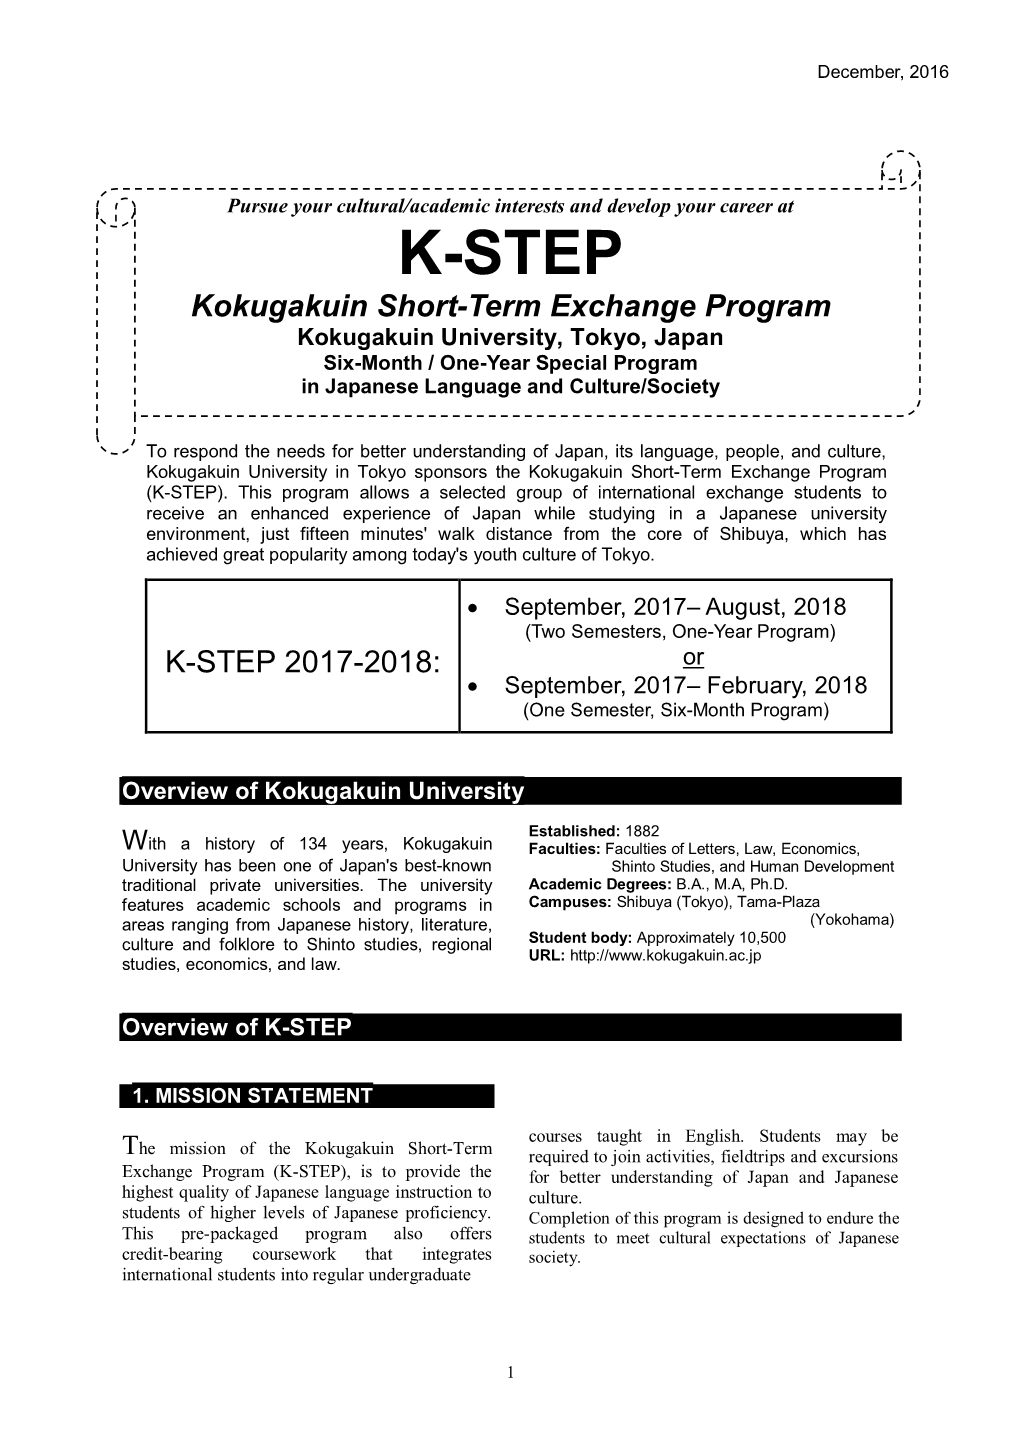 K-STEP Kokugakuin Short-Term Exchange Program Kokugakuin University, Tokyo, Japan Six-Month / One-Year Special Program in Japanese Language and Culture/Society